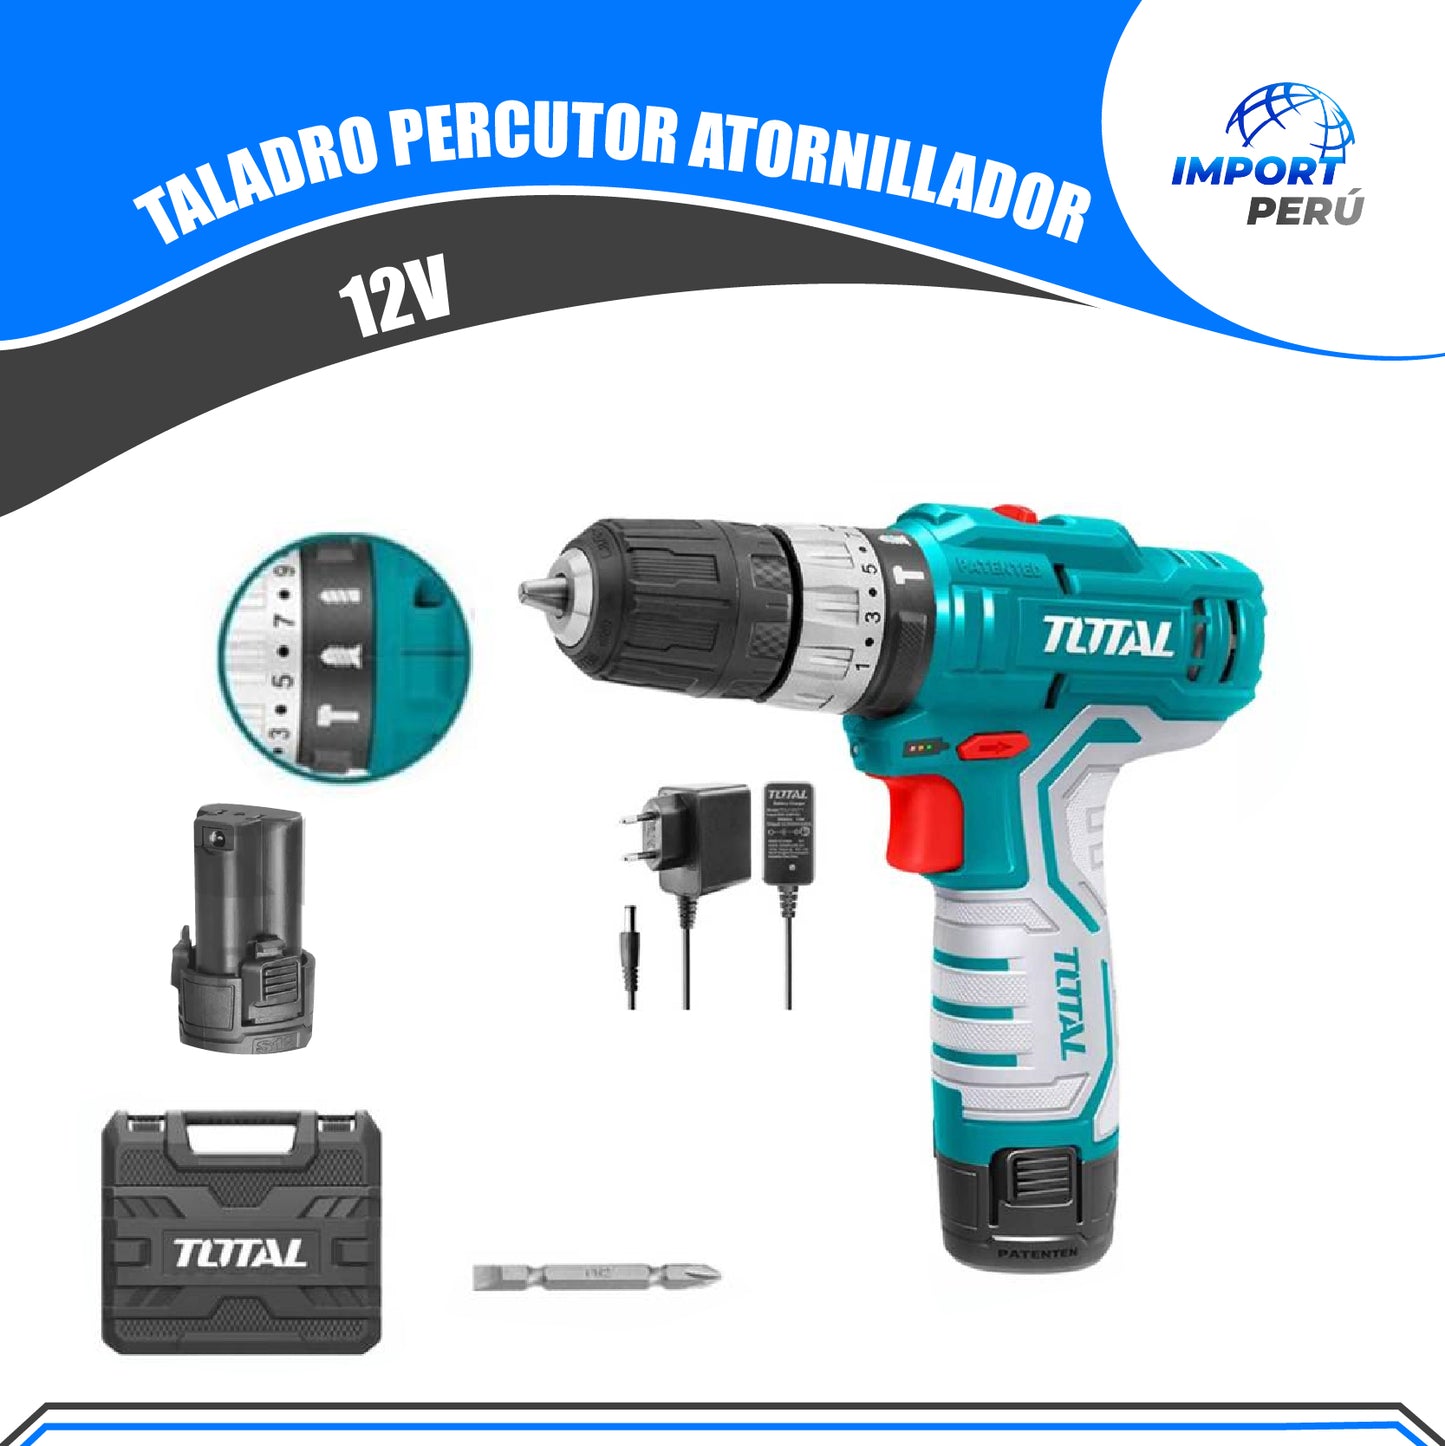 Taladro atornillador 12V super select